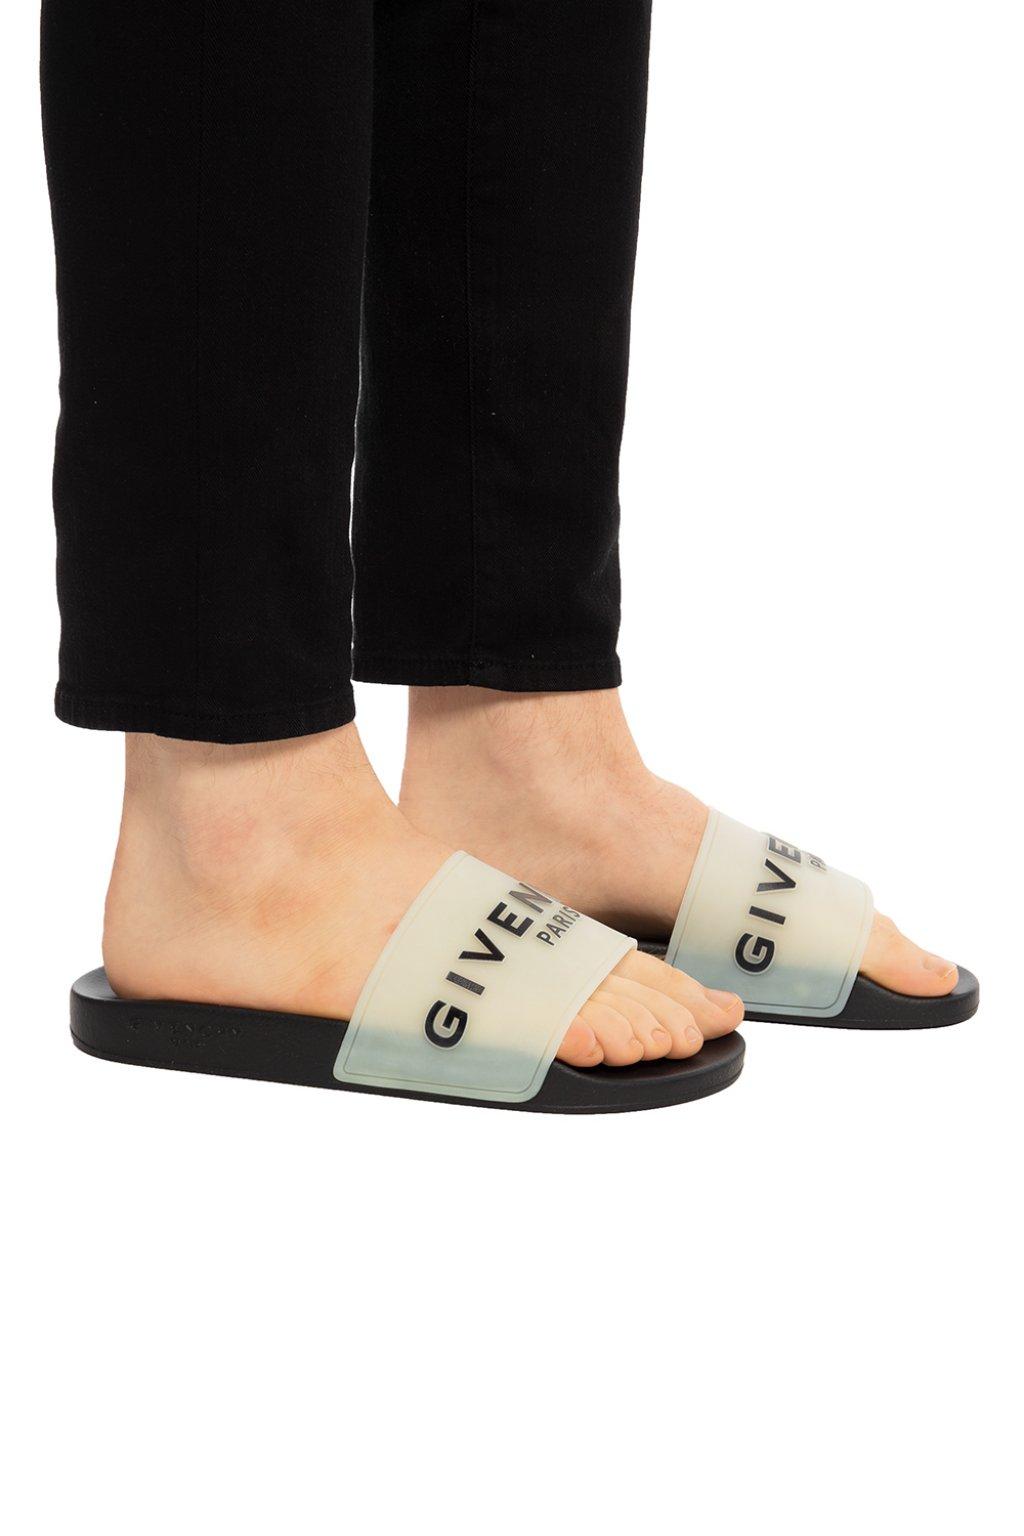 Glow-in-the-dark Rubber Slide Sandals 